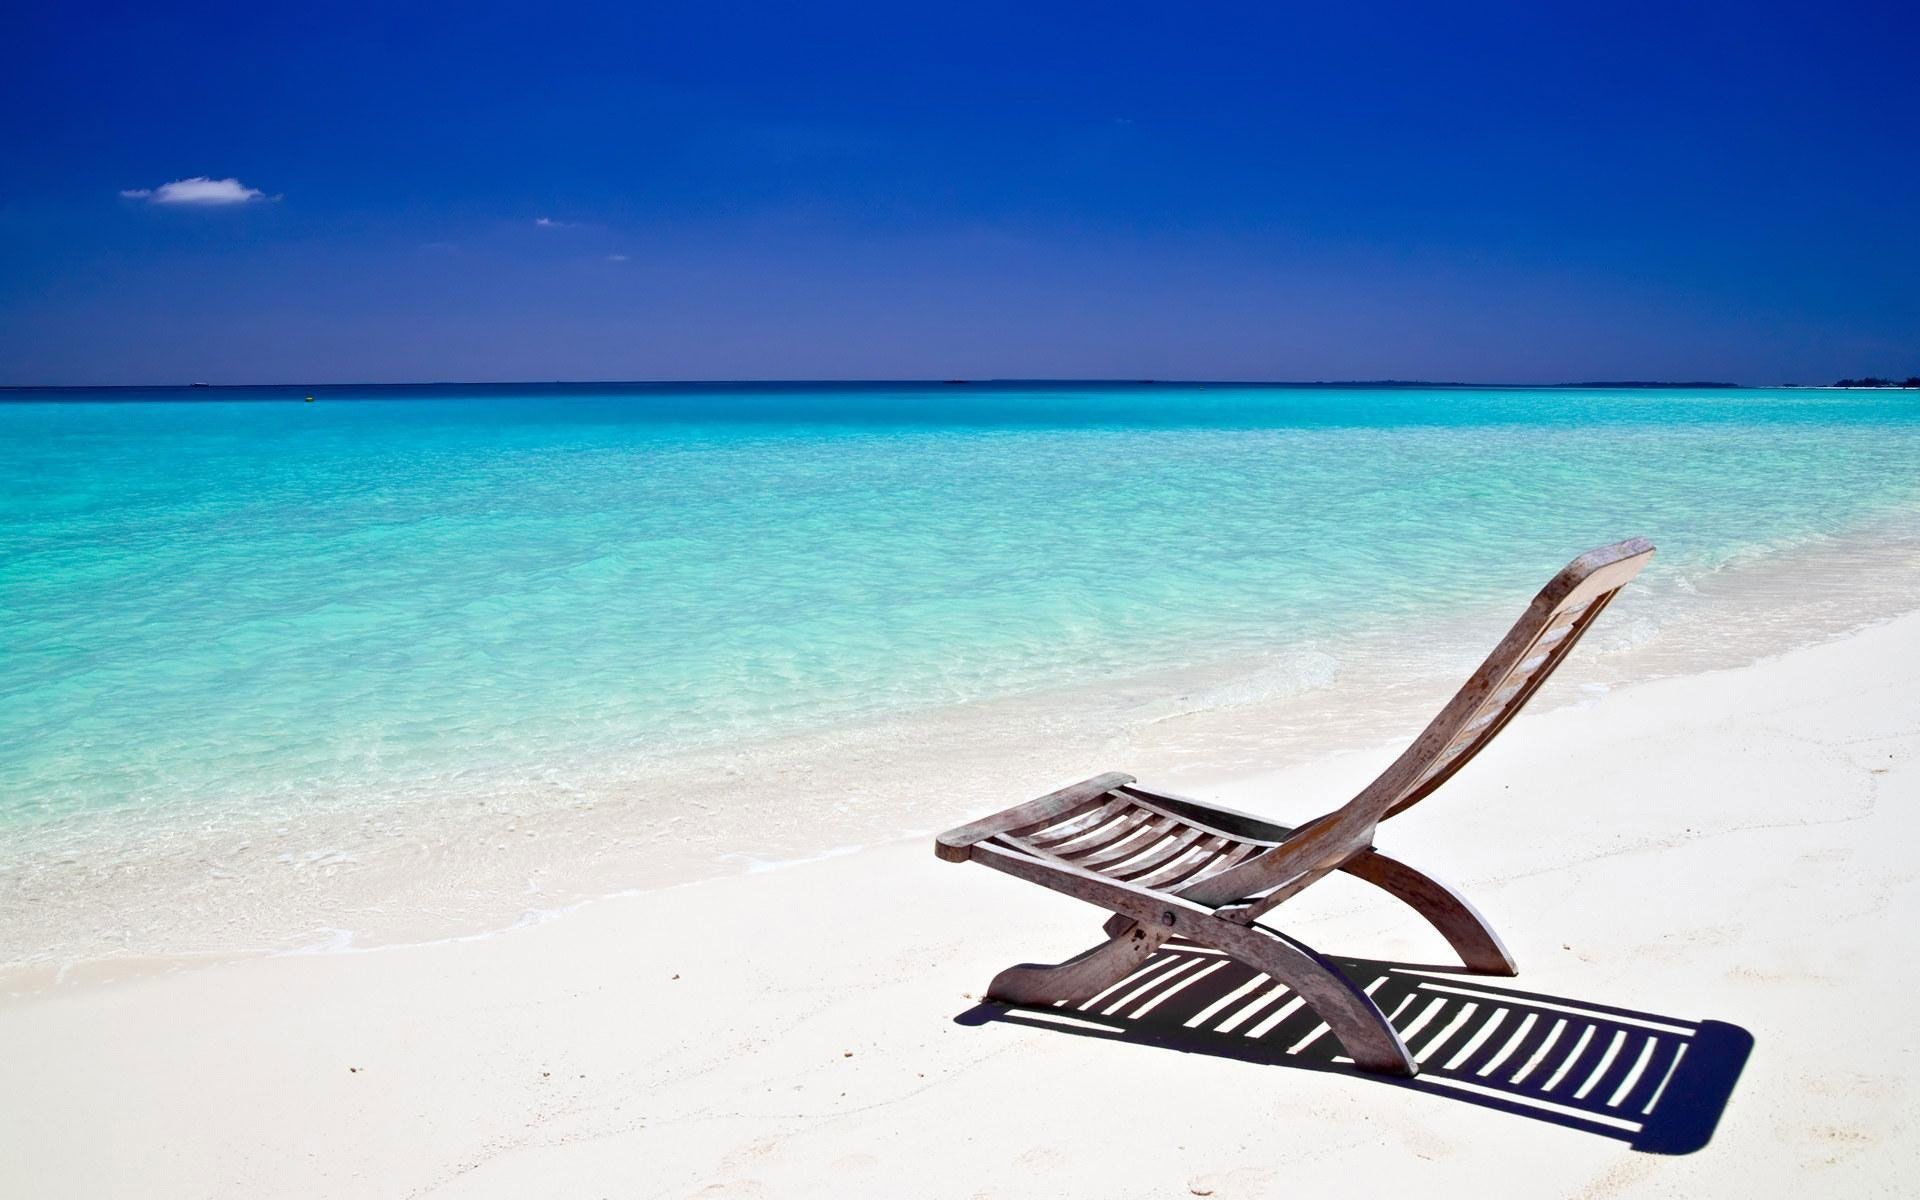 Umbrella beach chairs sun 1366×768 iwallhd wallpaper hd Download Wallpaper Pinterest Beach chairs and Wallpaper